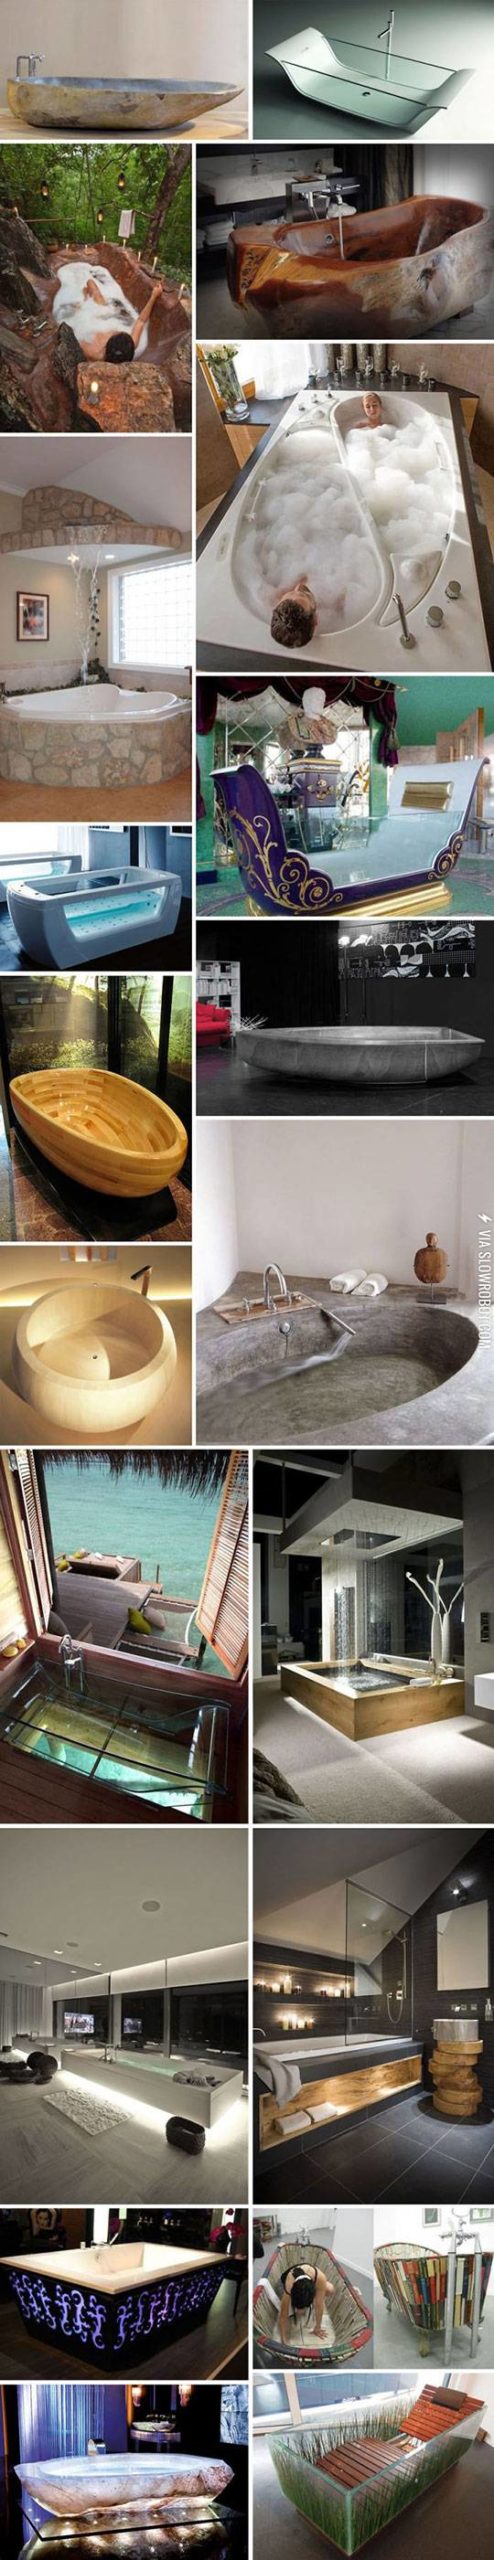 Awesome+bathtubs.